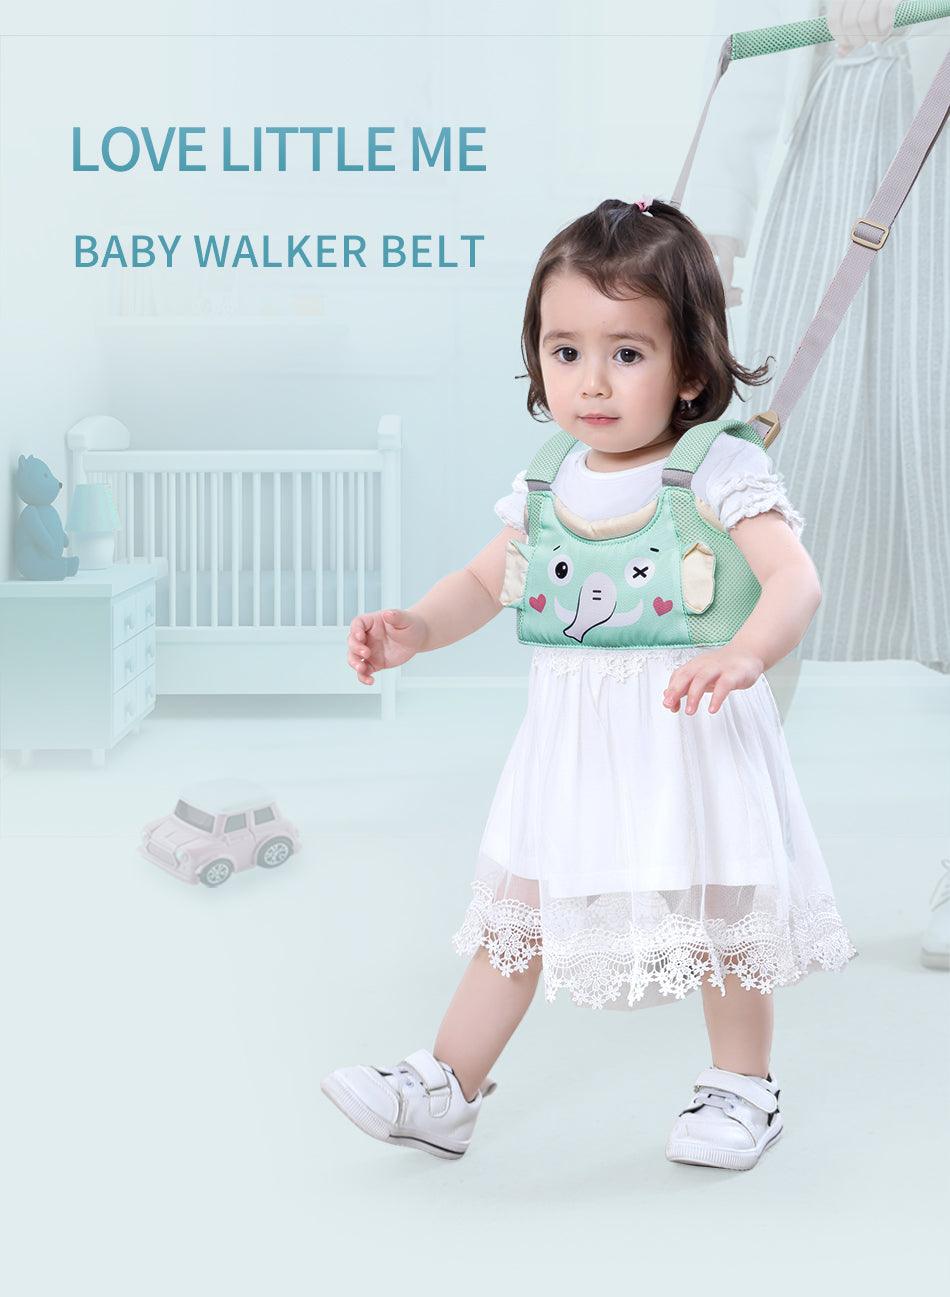 Safety Walking Belt Baby Harnesses Leashes - Baby Walk Assistant Belt - Walker Toddler Wings Cartoon (X9)(F1)